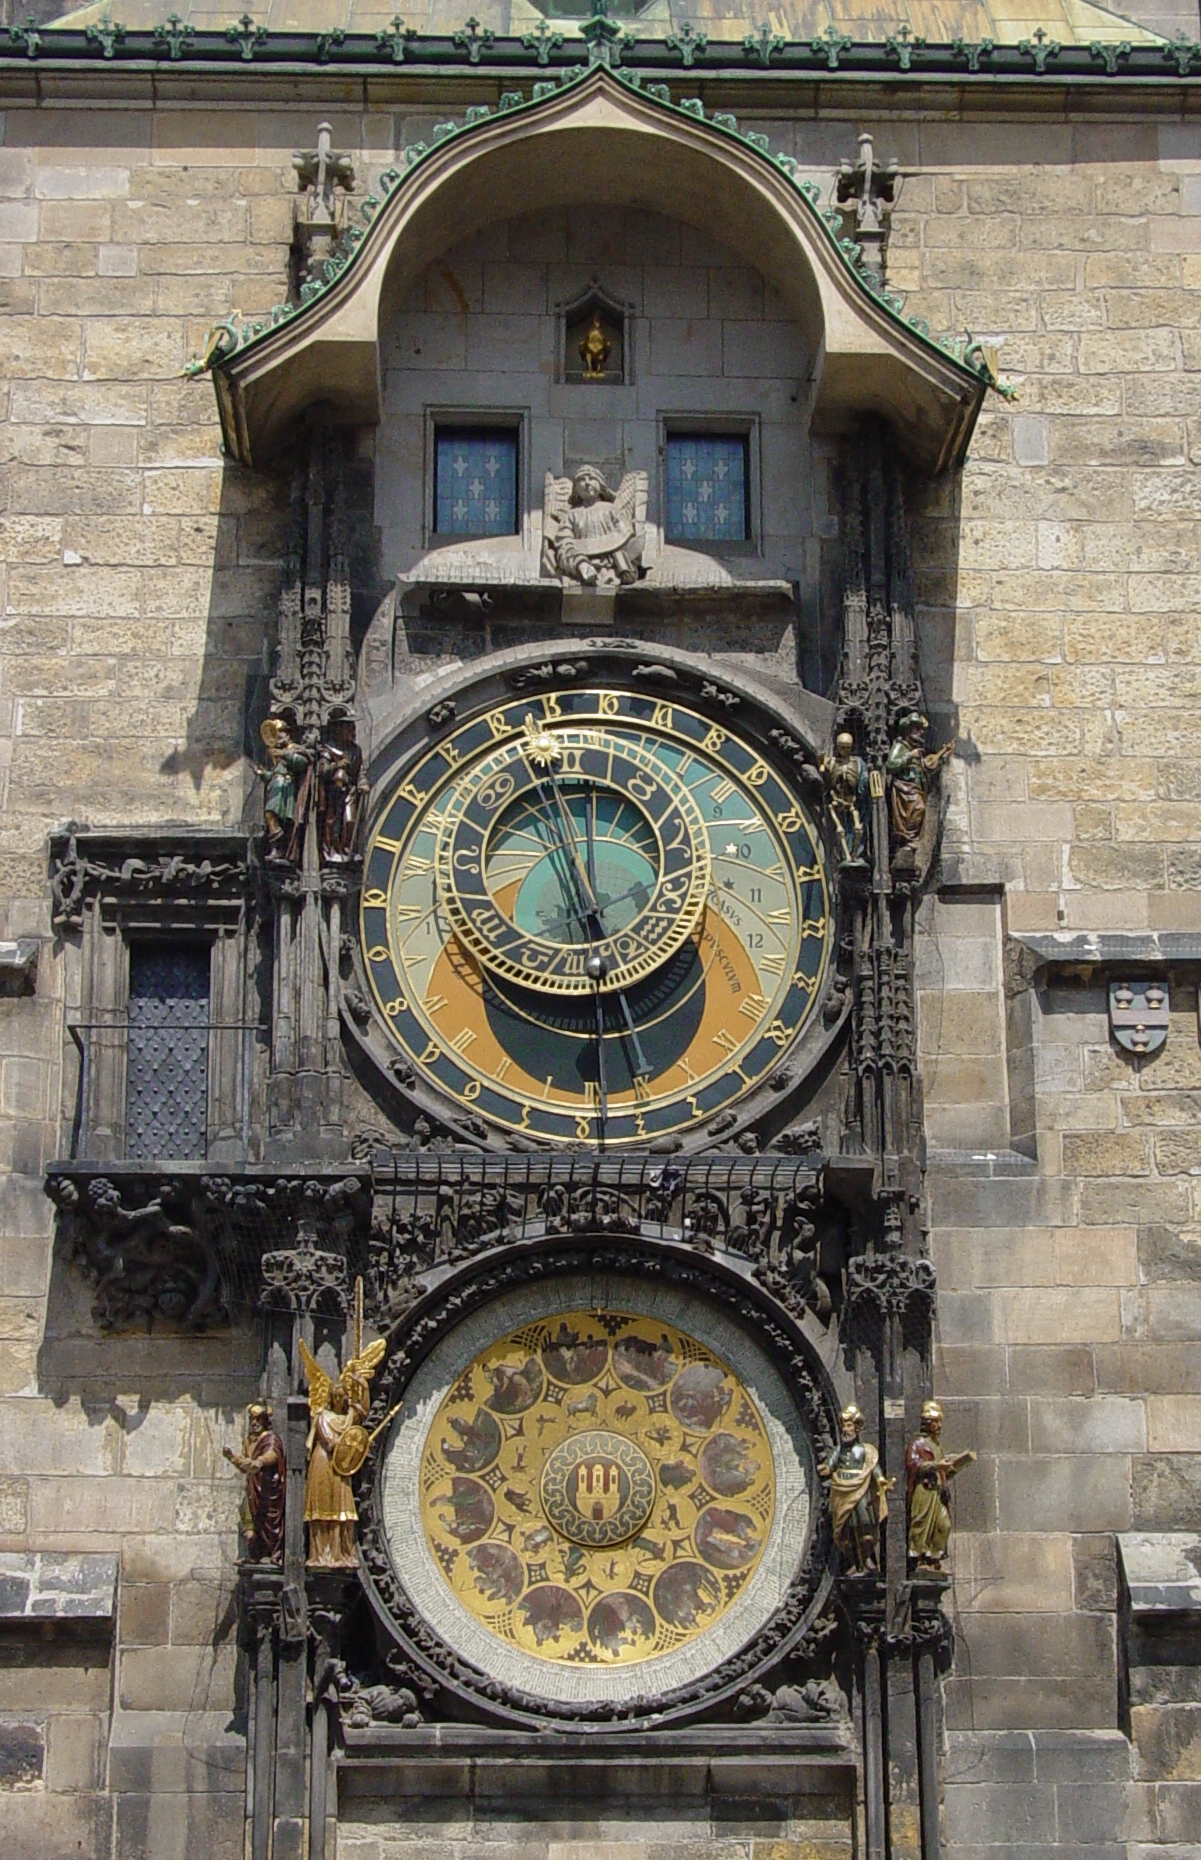 Prague townhall clock full view